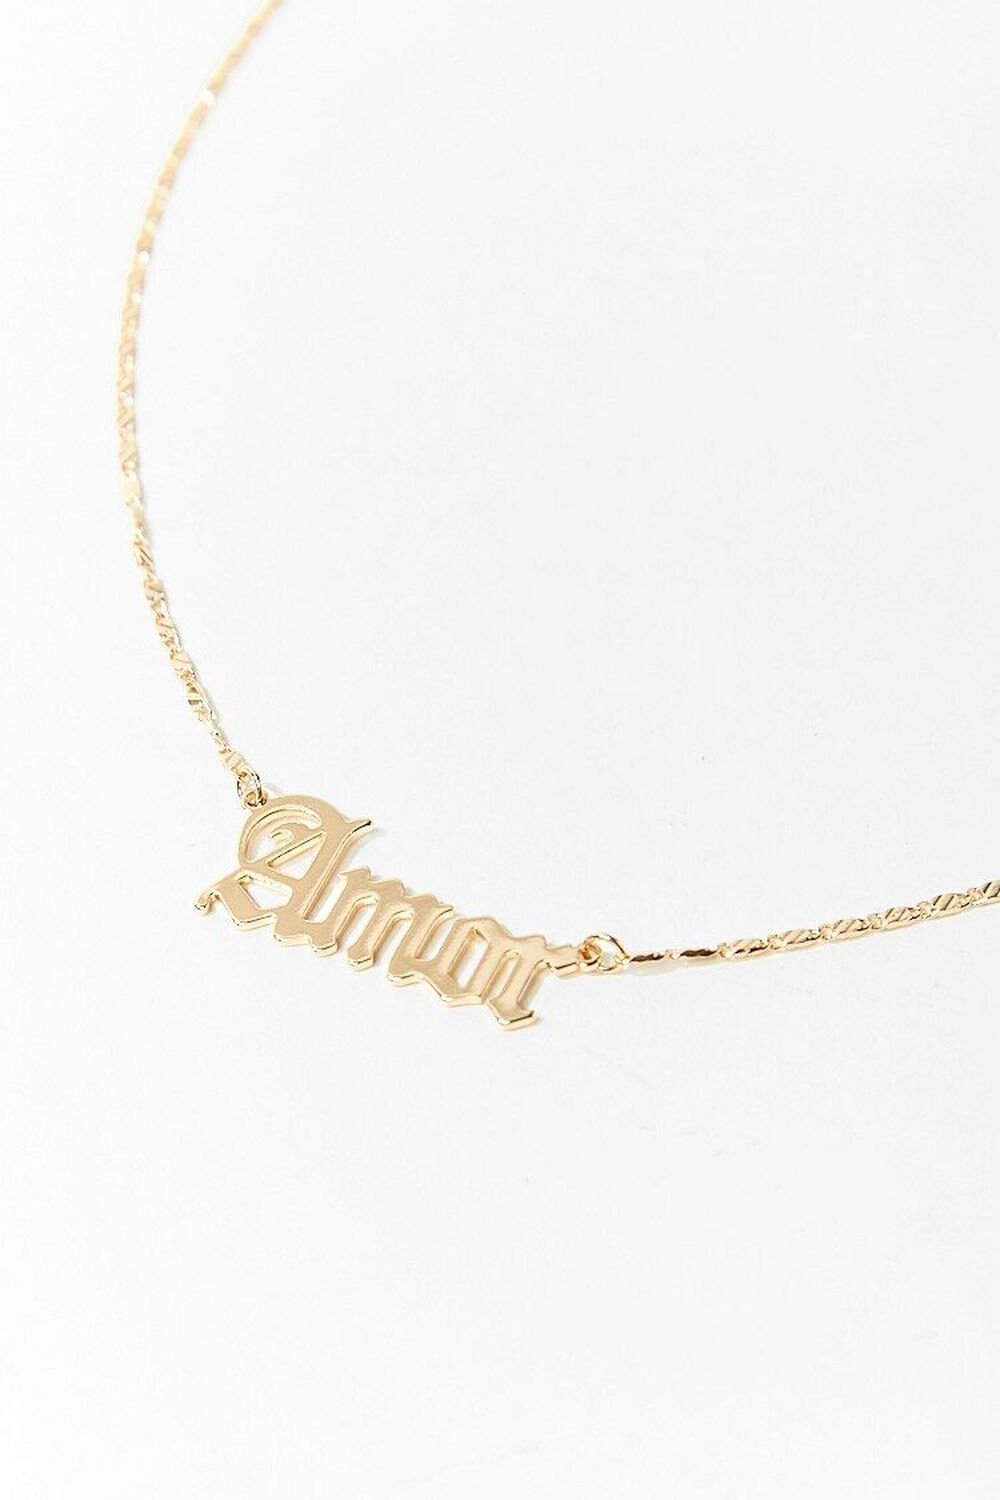 GOLD Amor Pendant Necklace, image 1